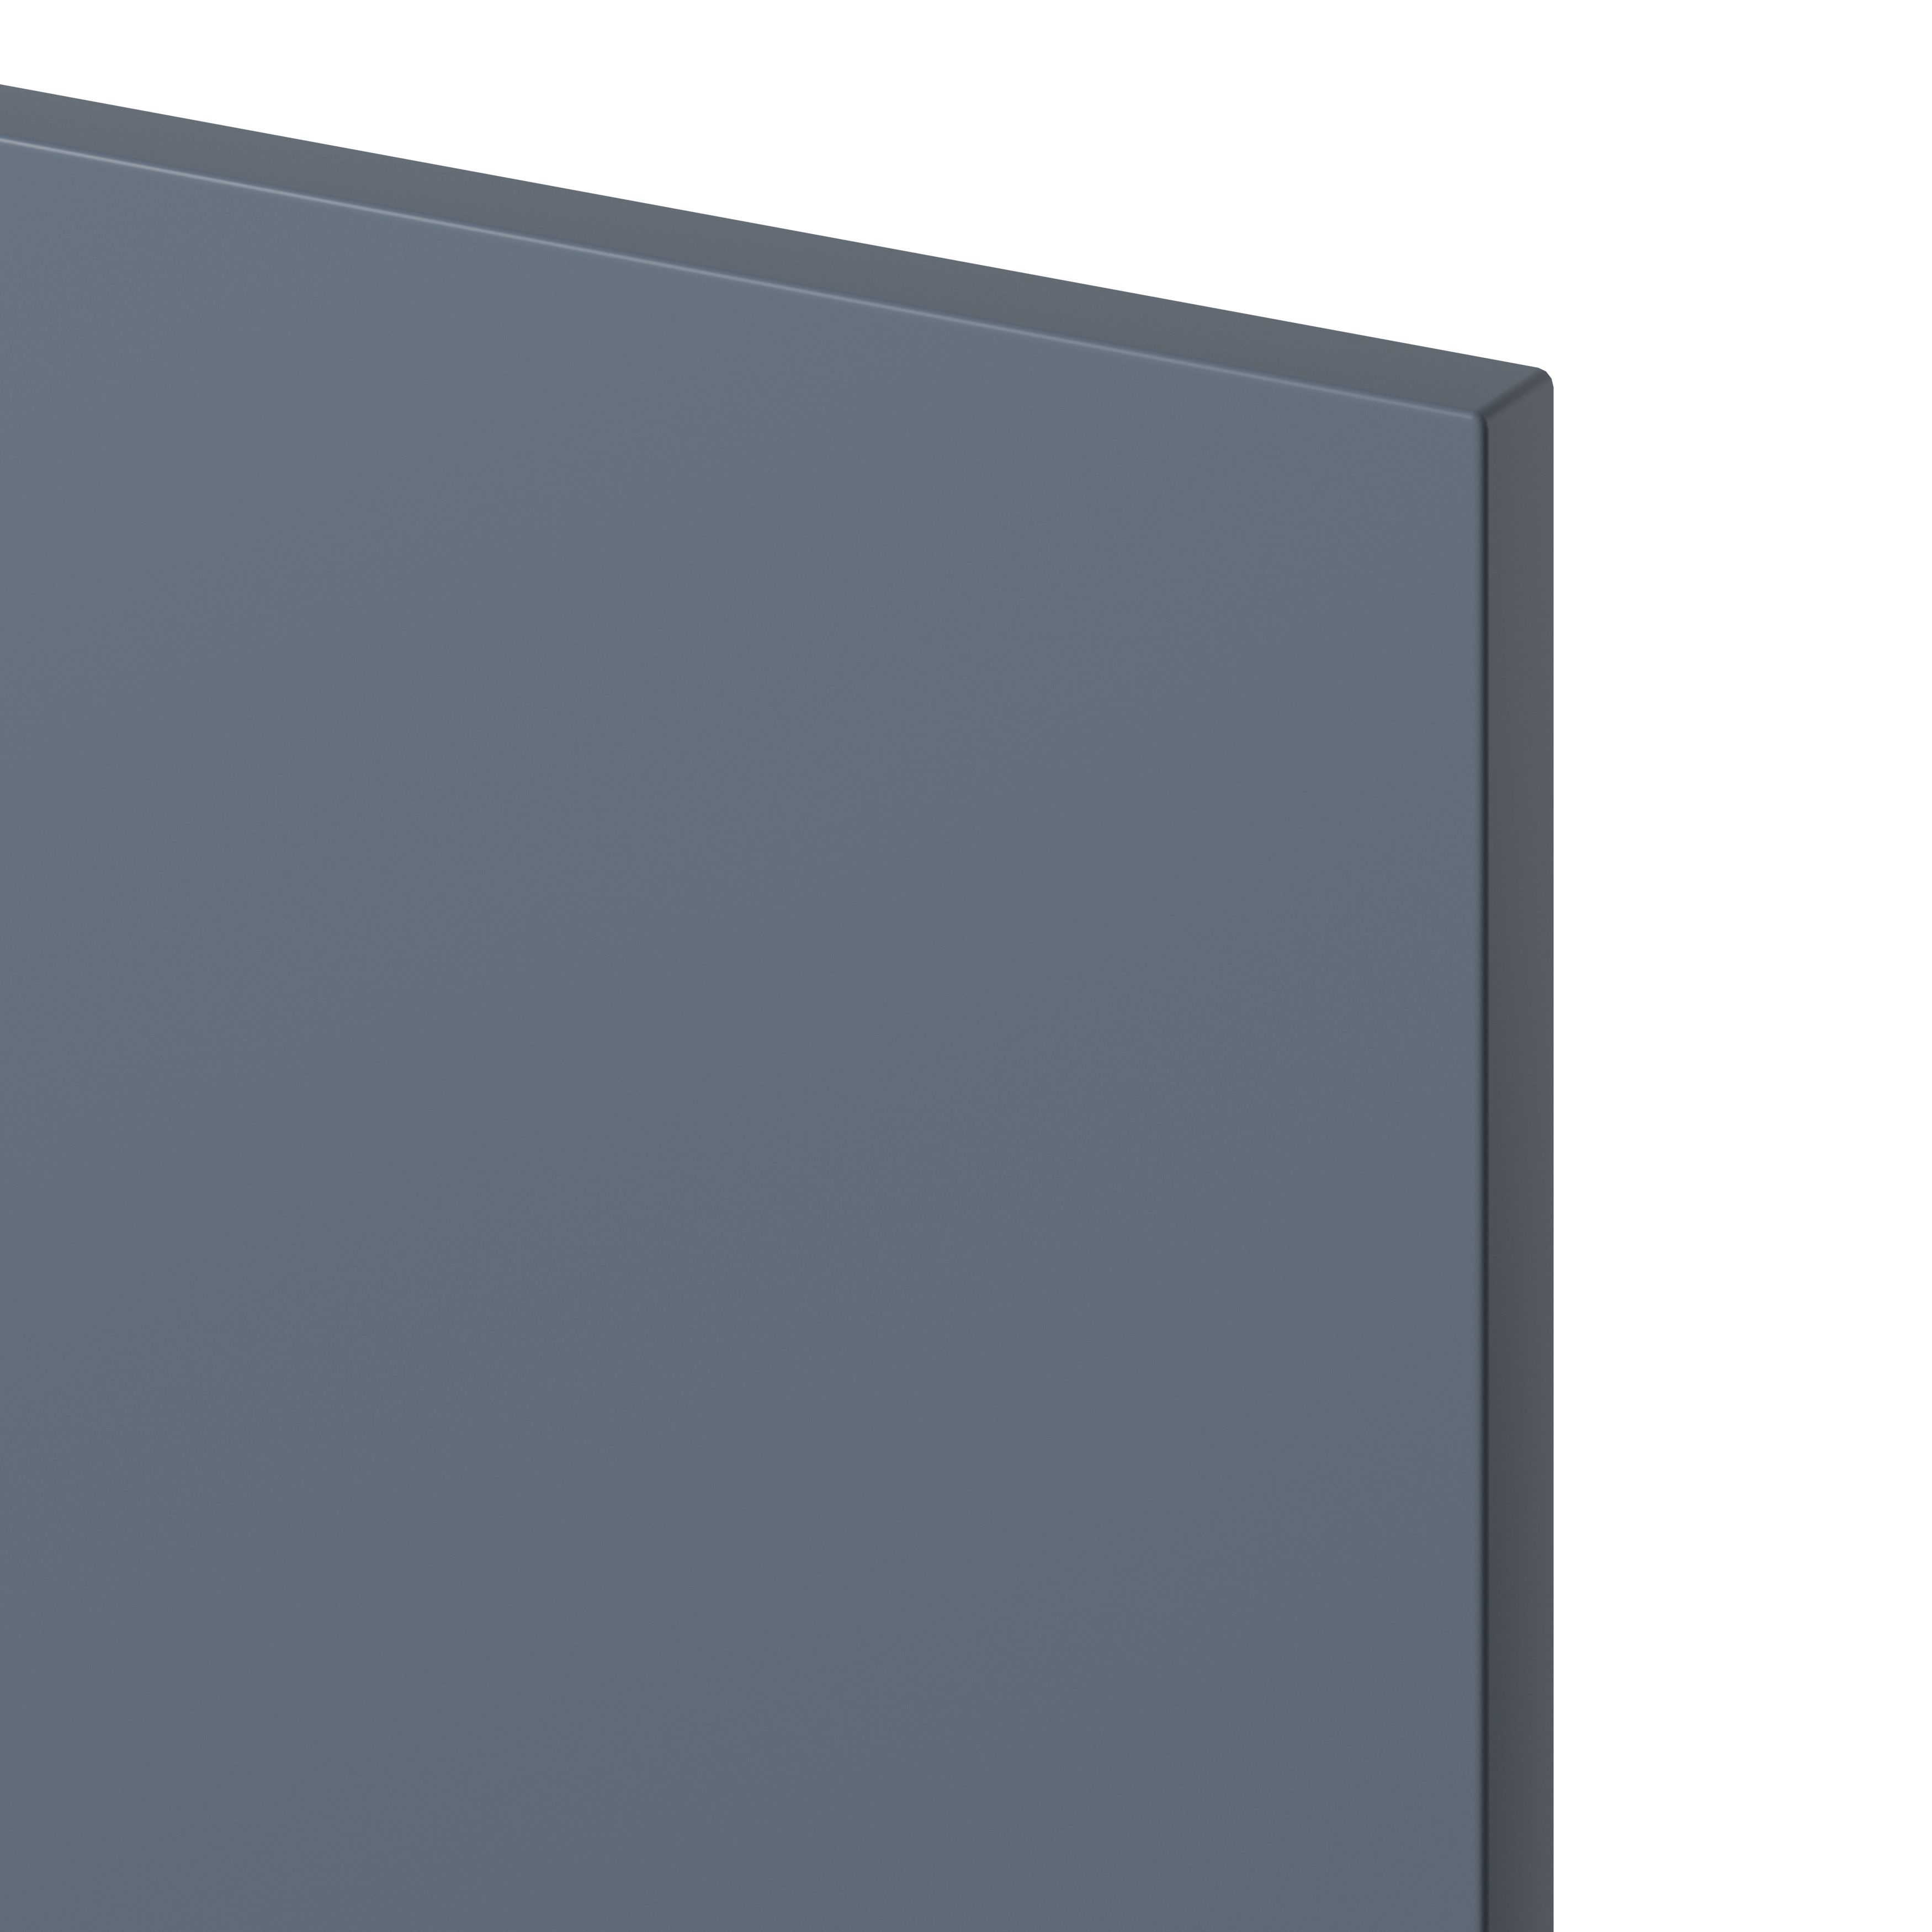 GoodHome Alisma Matt blue slab Standard Drawer end panel (H)340mm (W)595mm, Pack of 2